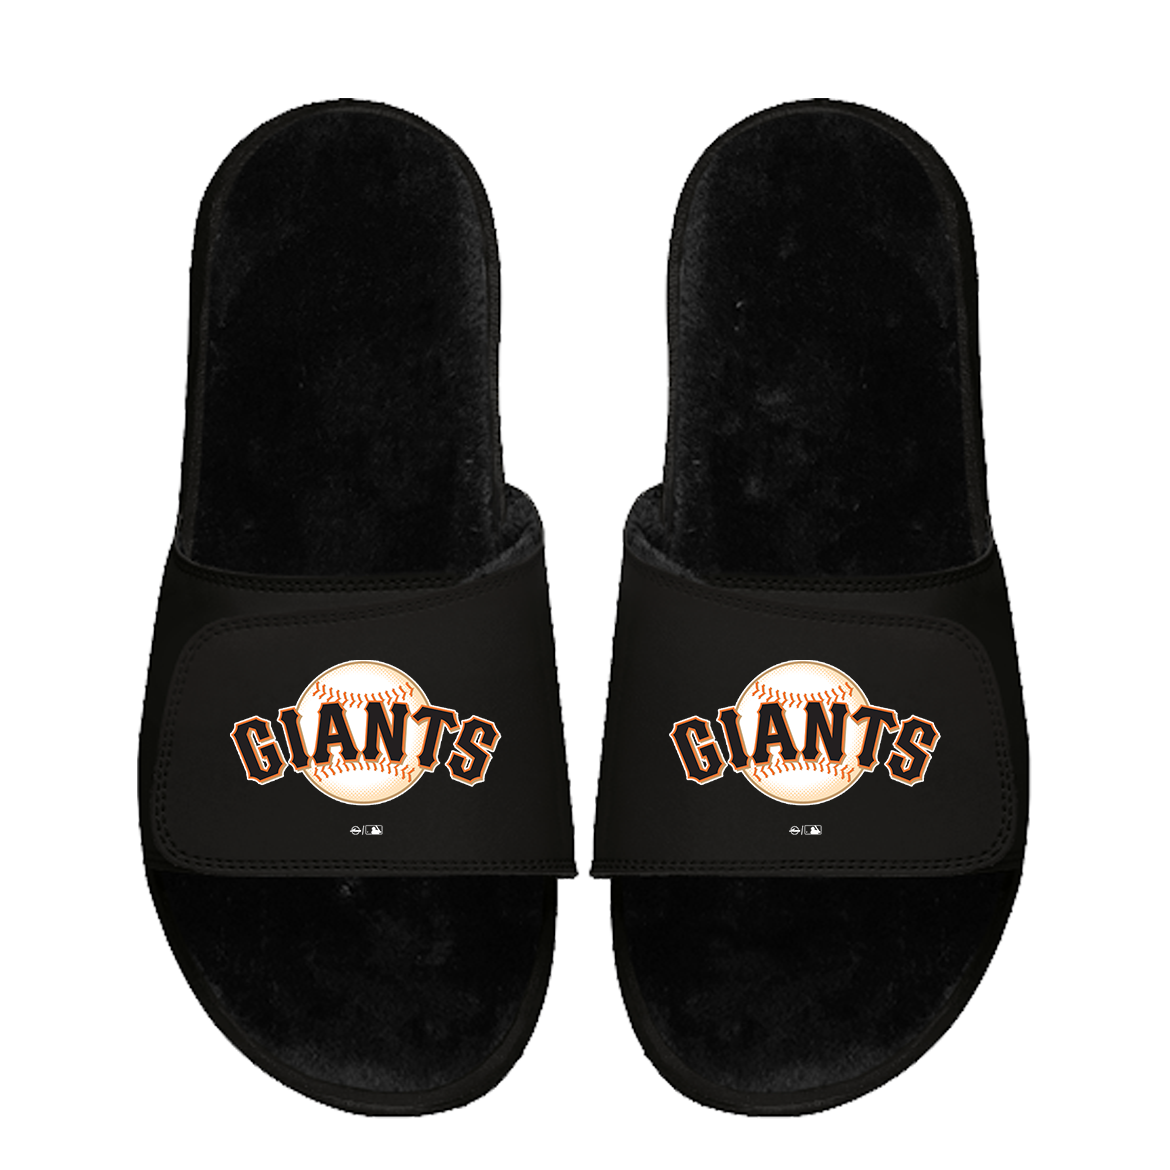 San Francisco Giants Primary Black Fur